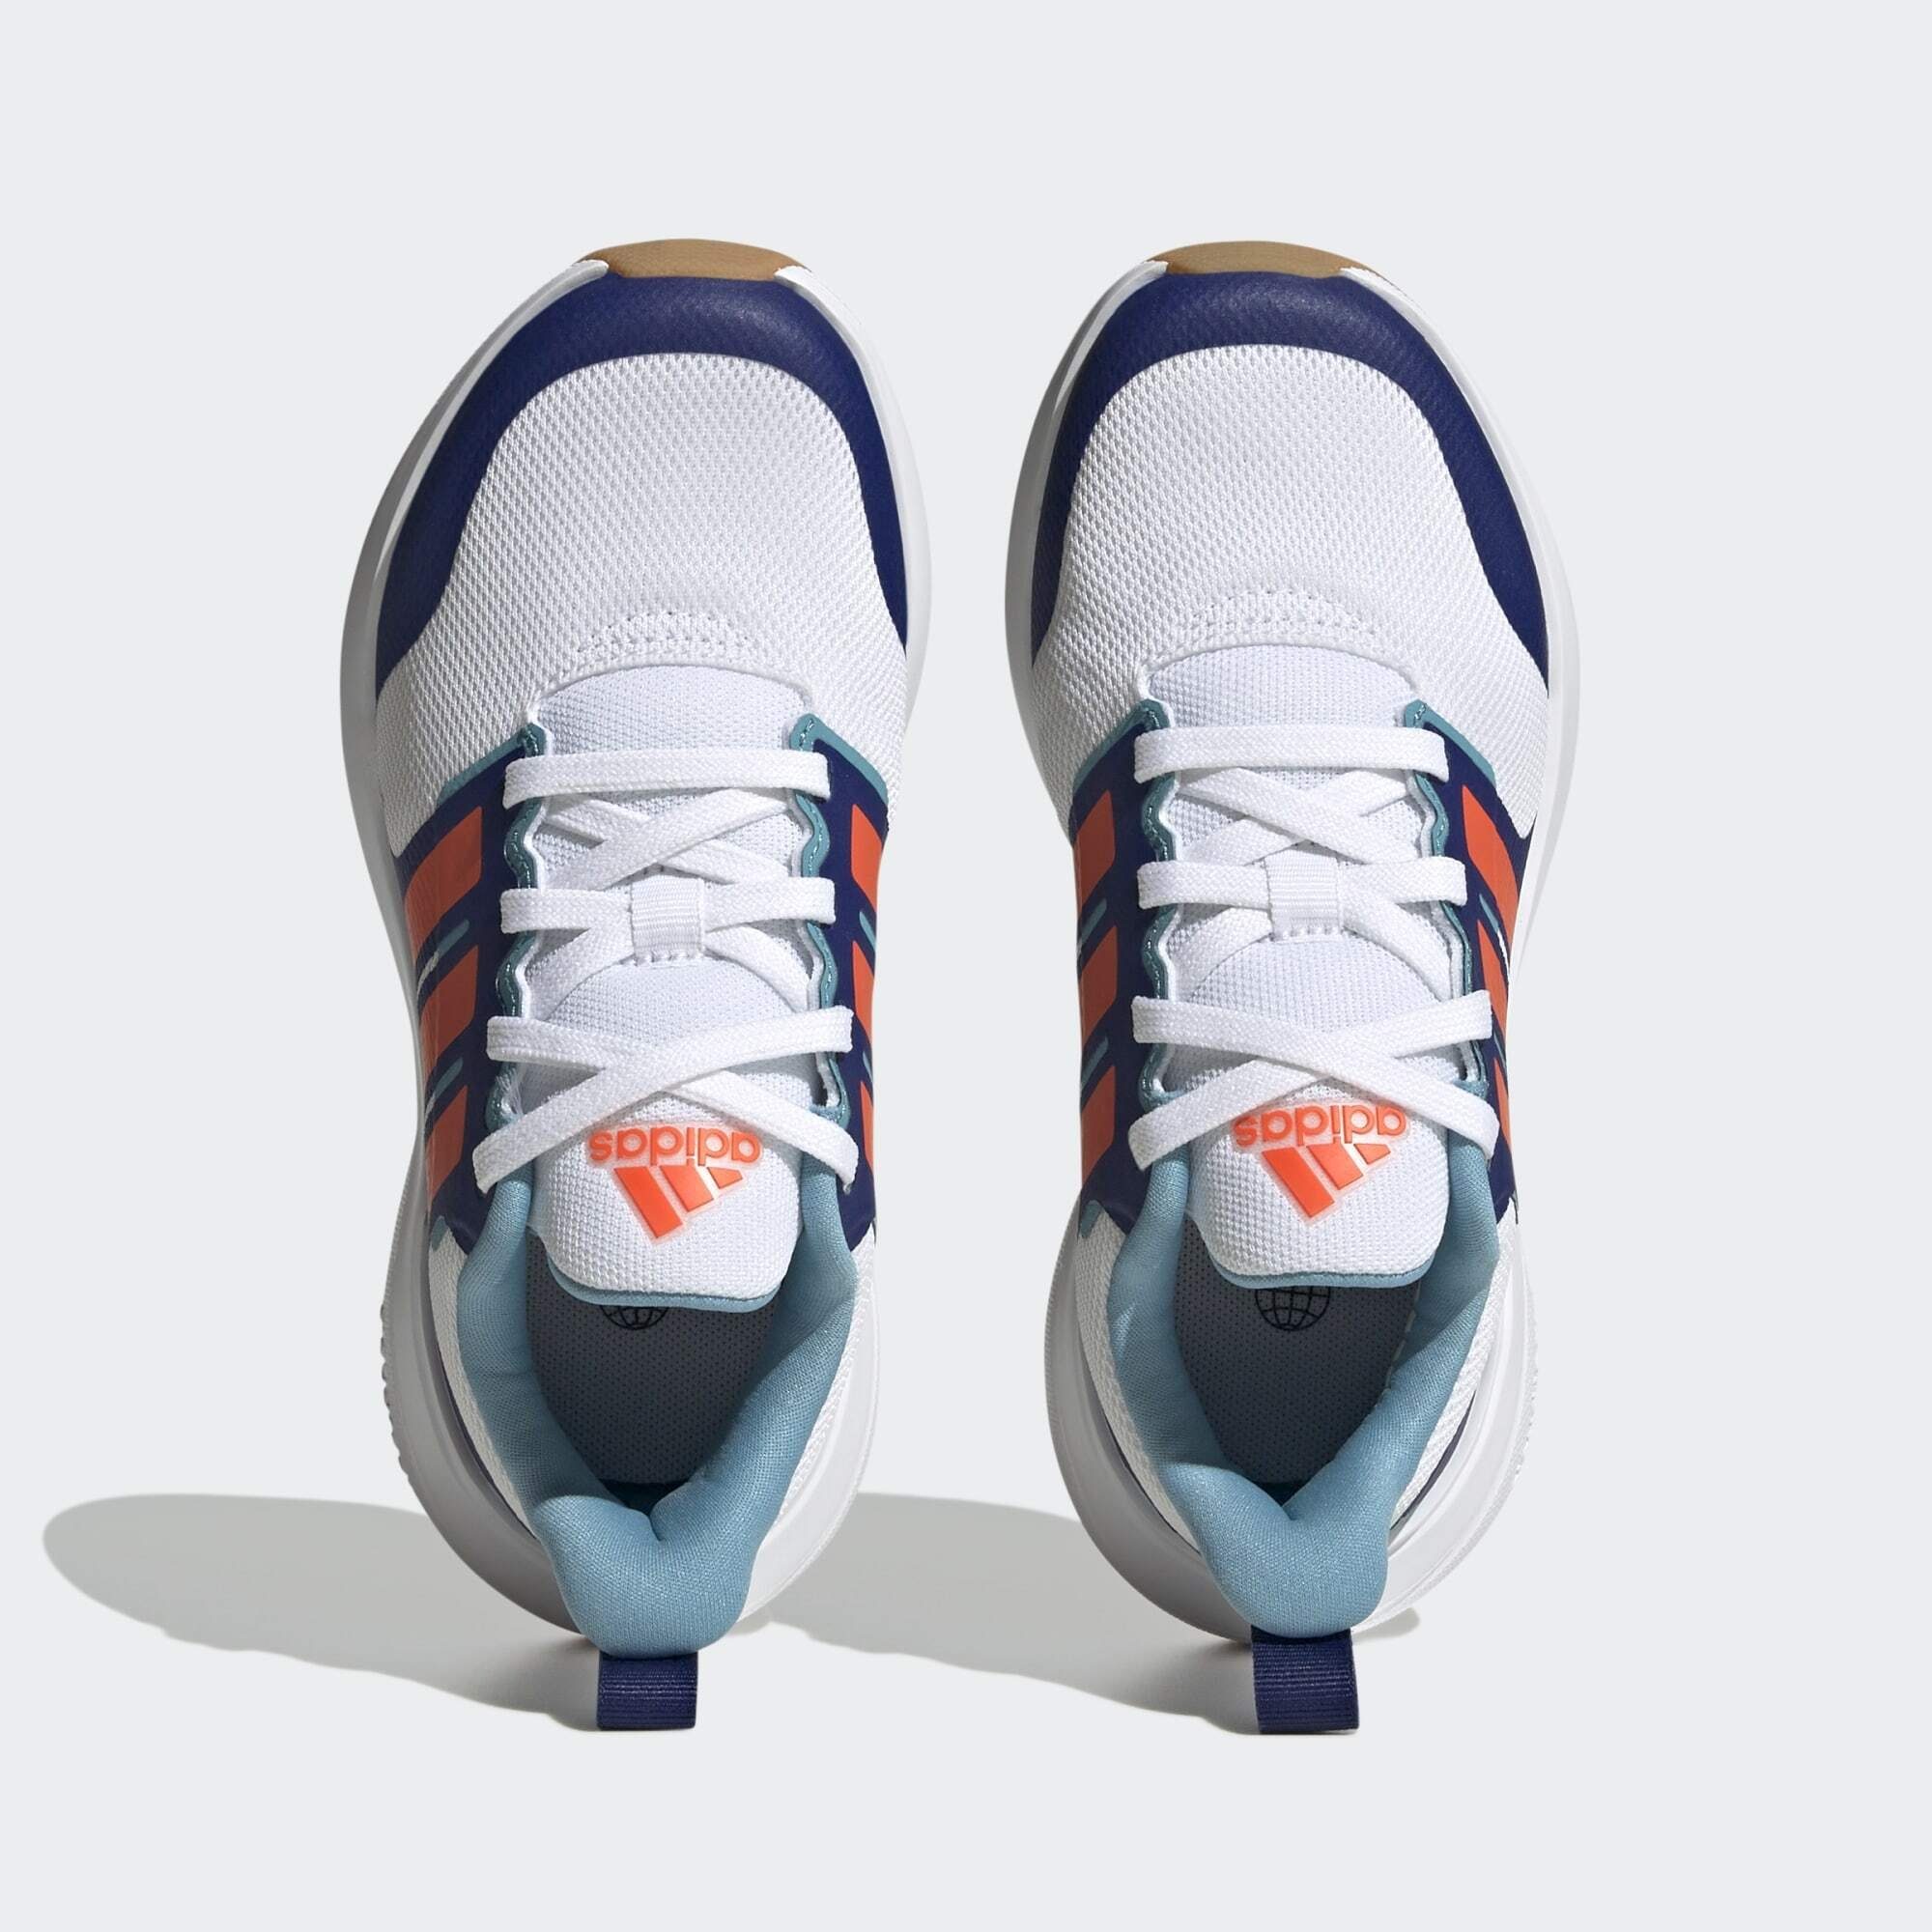 Cloud LACE / CLOUDFOAM Sneaker Red / FORTARUN Victory Solar White Blue adidas SCHUH 2.0 Sportswear